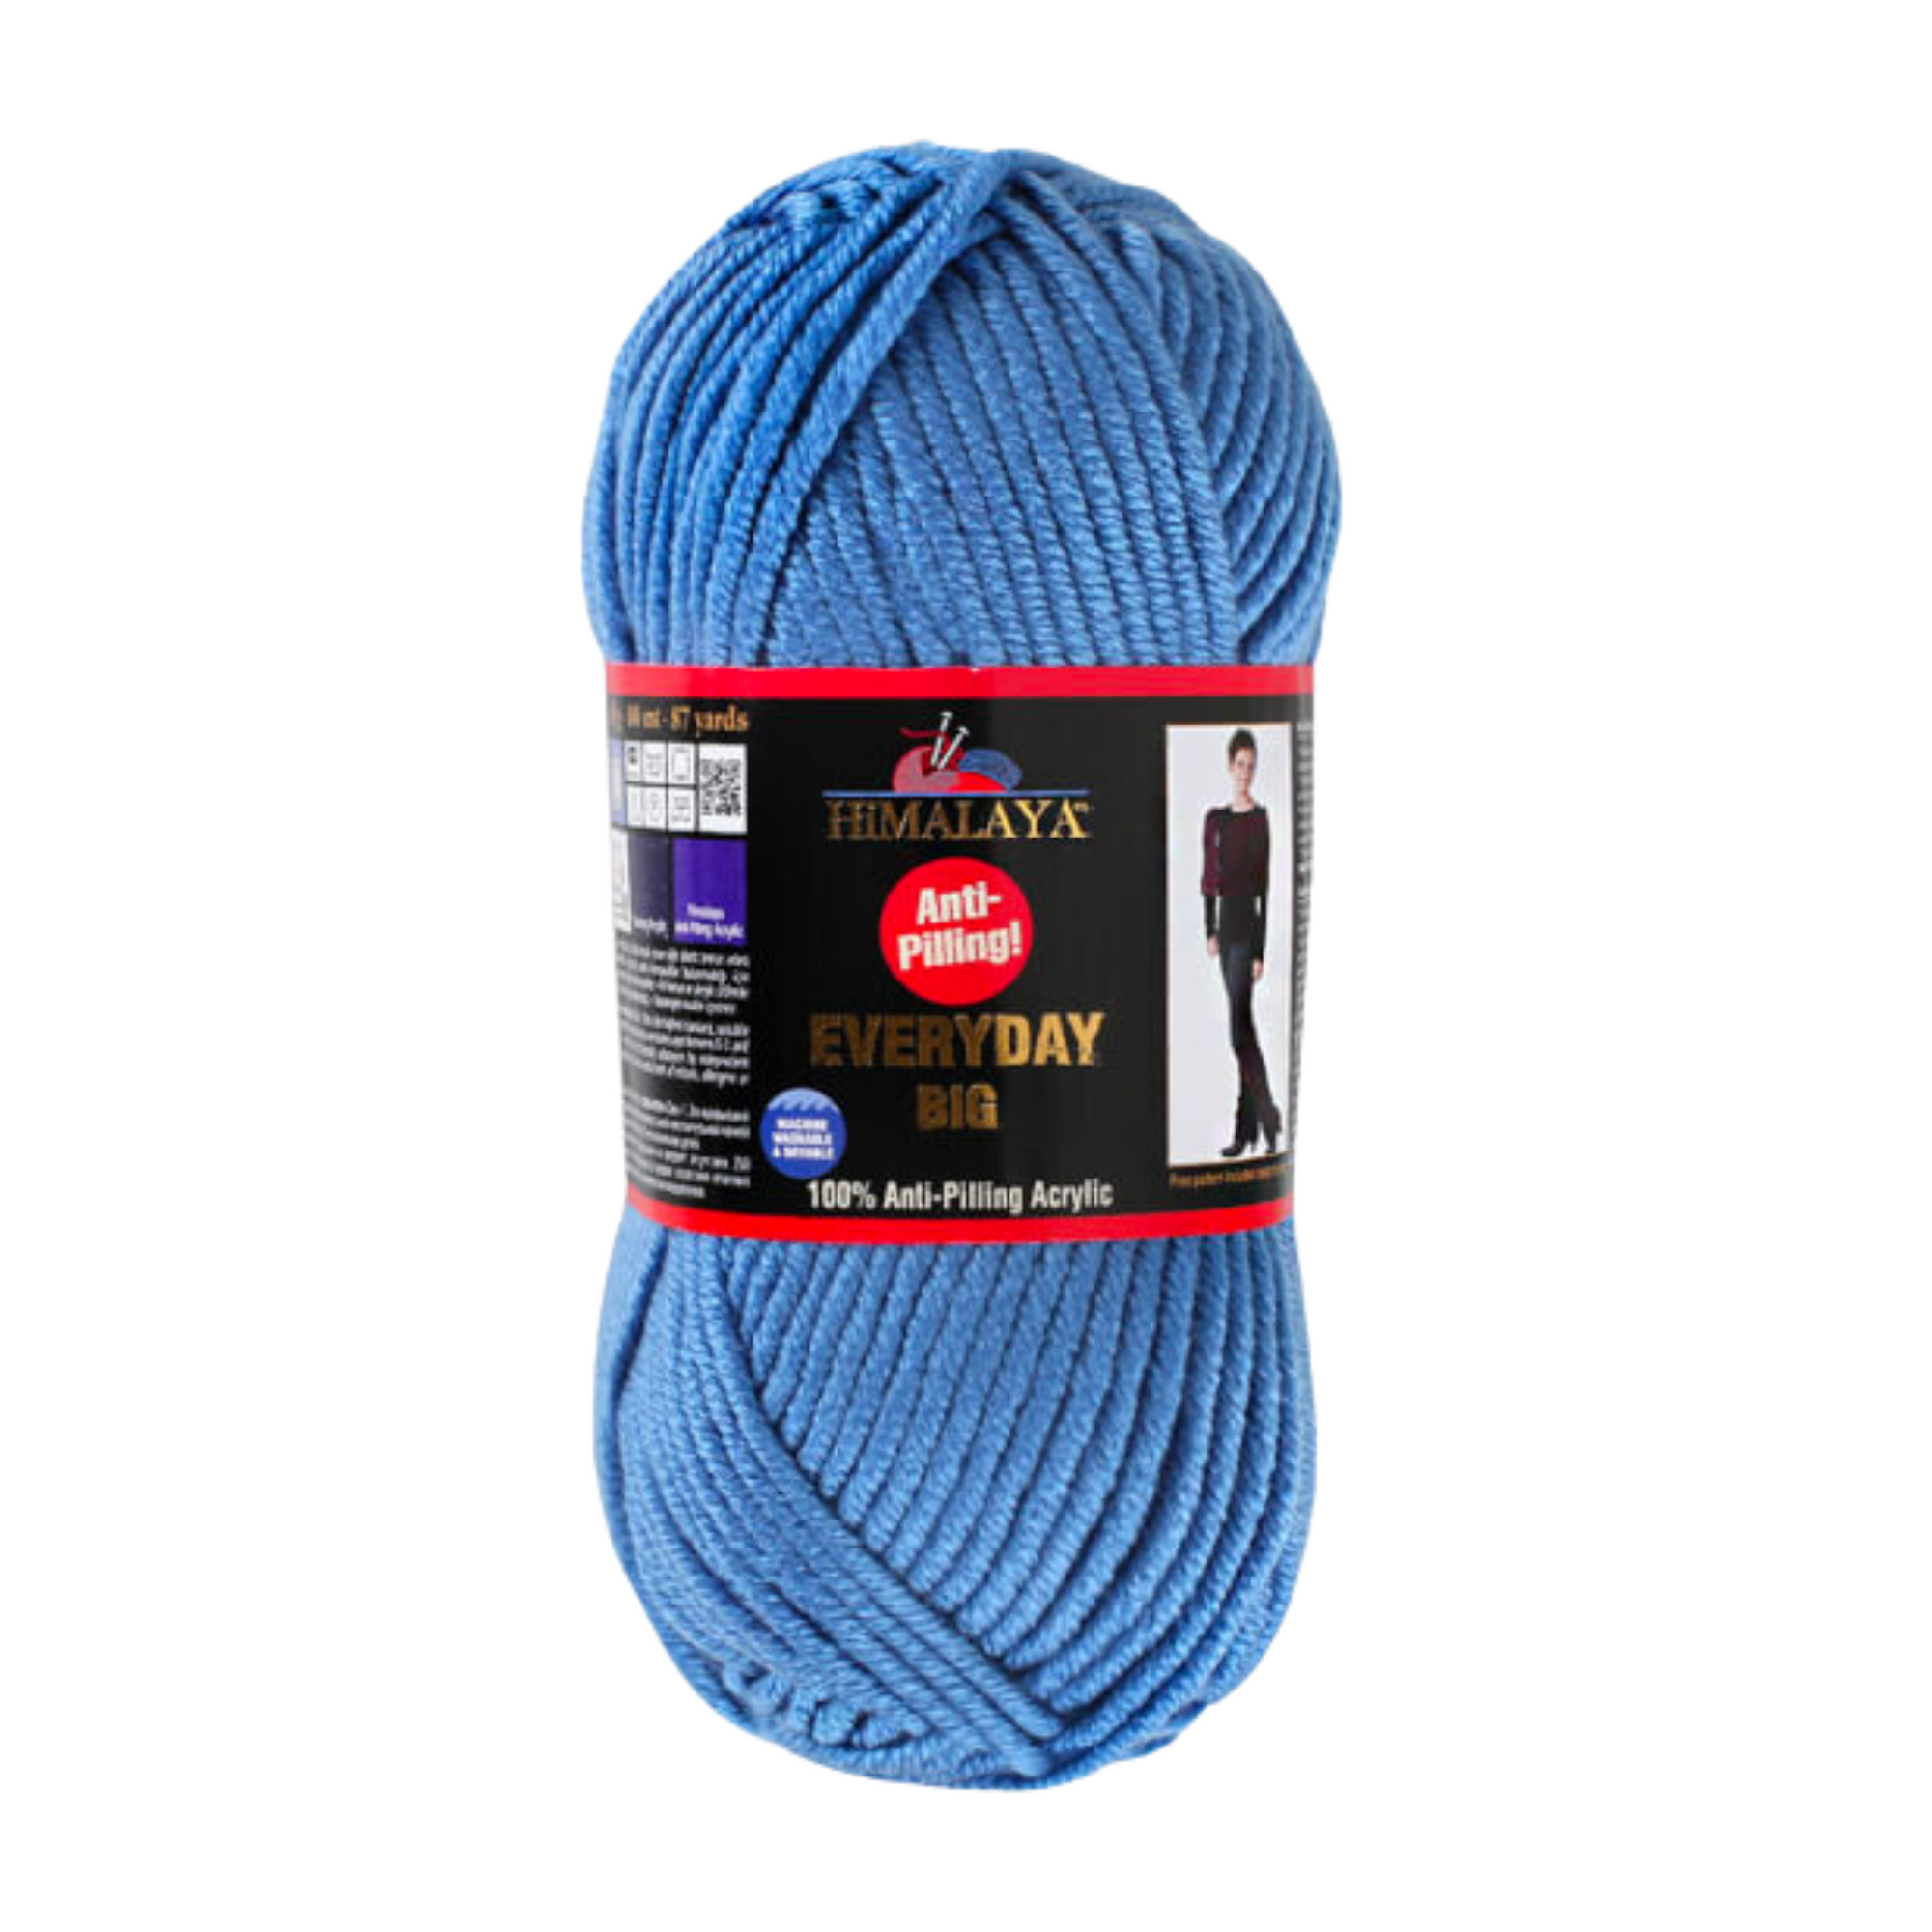 Himalaya Everyday 100% Anti-Pilling Acrylic Yarn, Dusty Rose - 70828